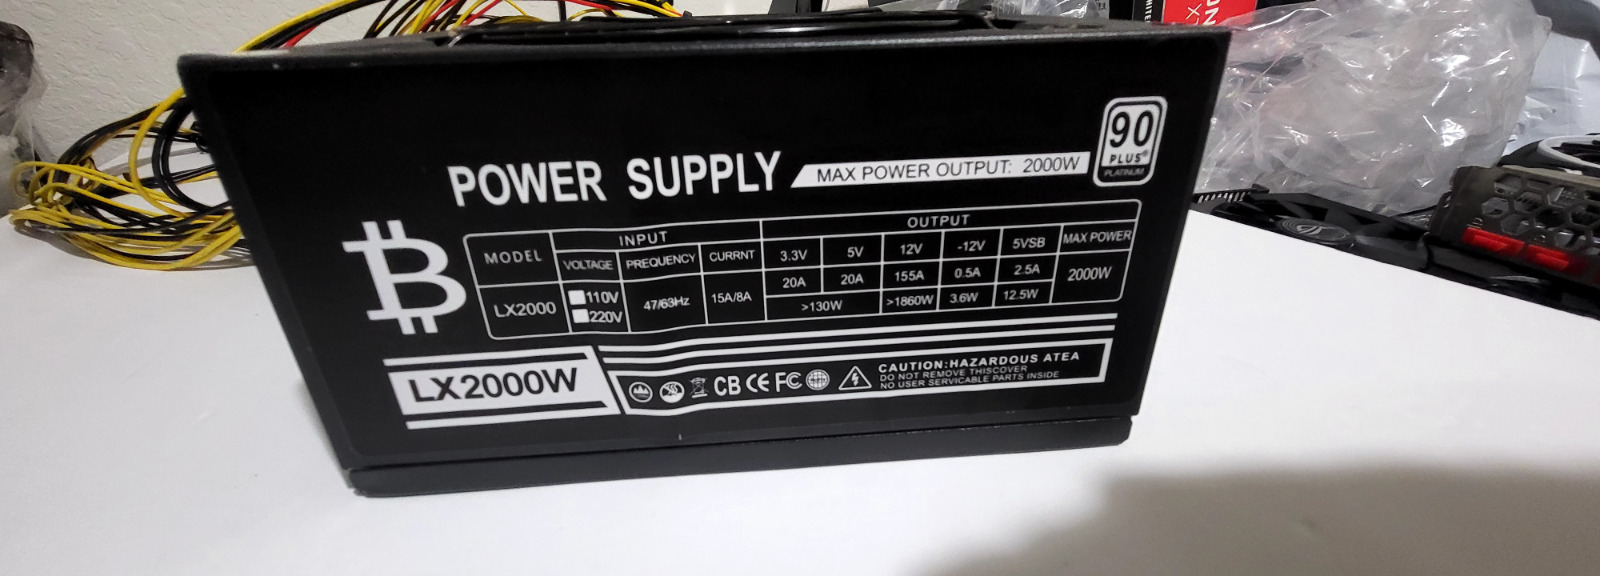 Modular Power Supply 20000W PSU For 8 GPU